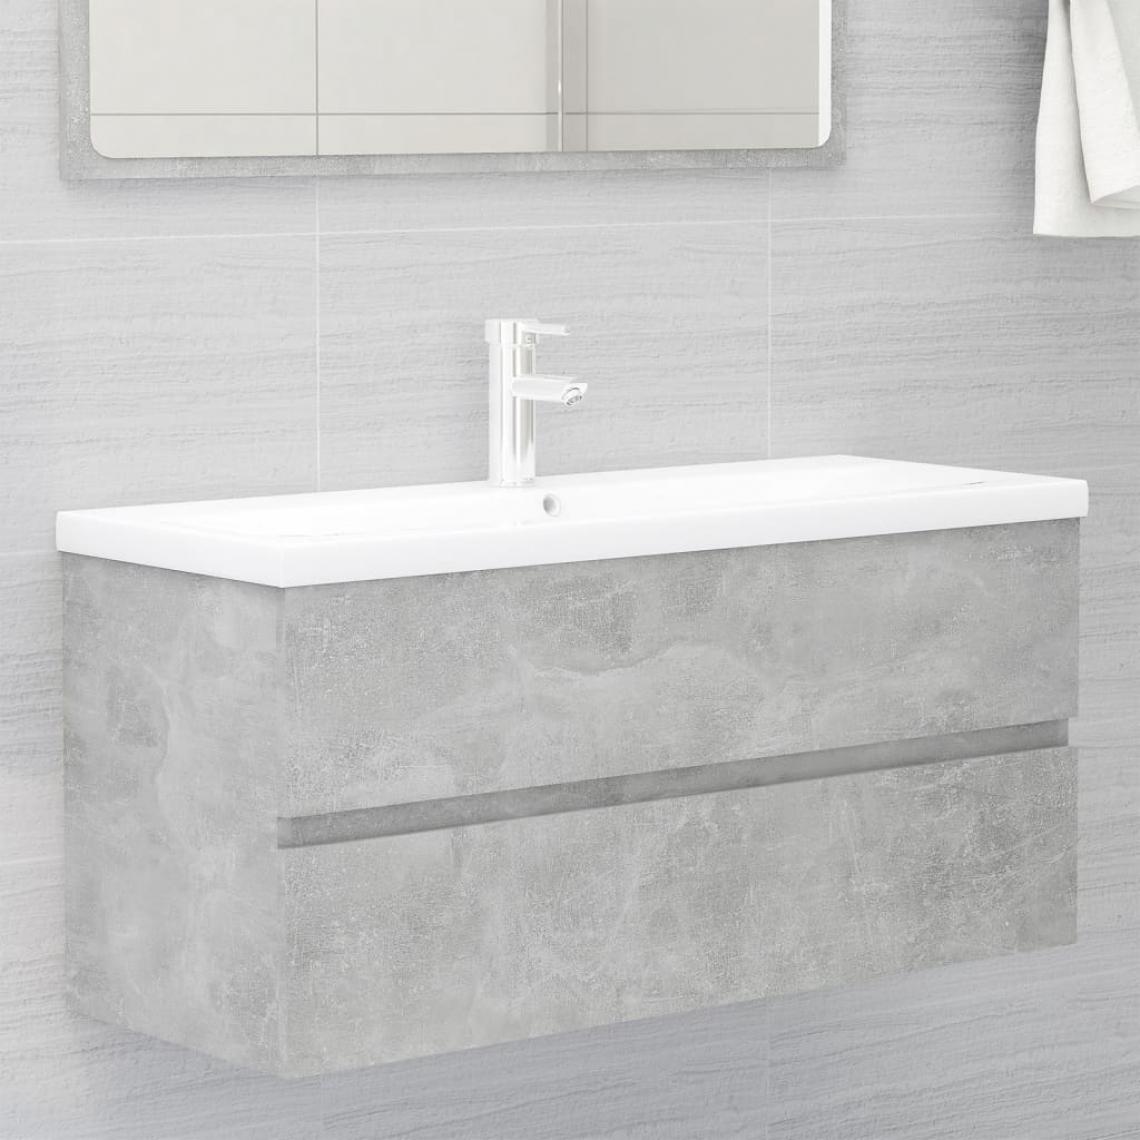 Vidaxl - vidaXL Armoire d'évier avec lavabo intégré Gris béton Aggloméré - meuble bas salle de bain